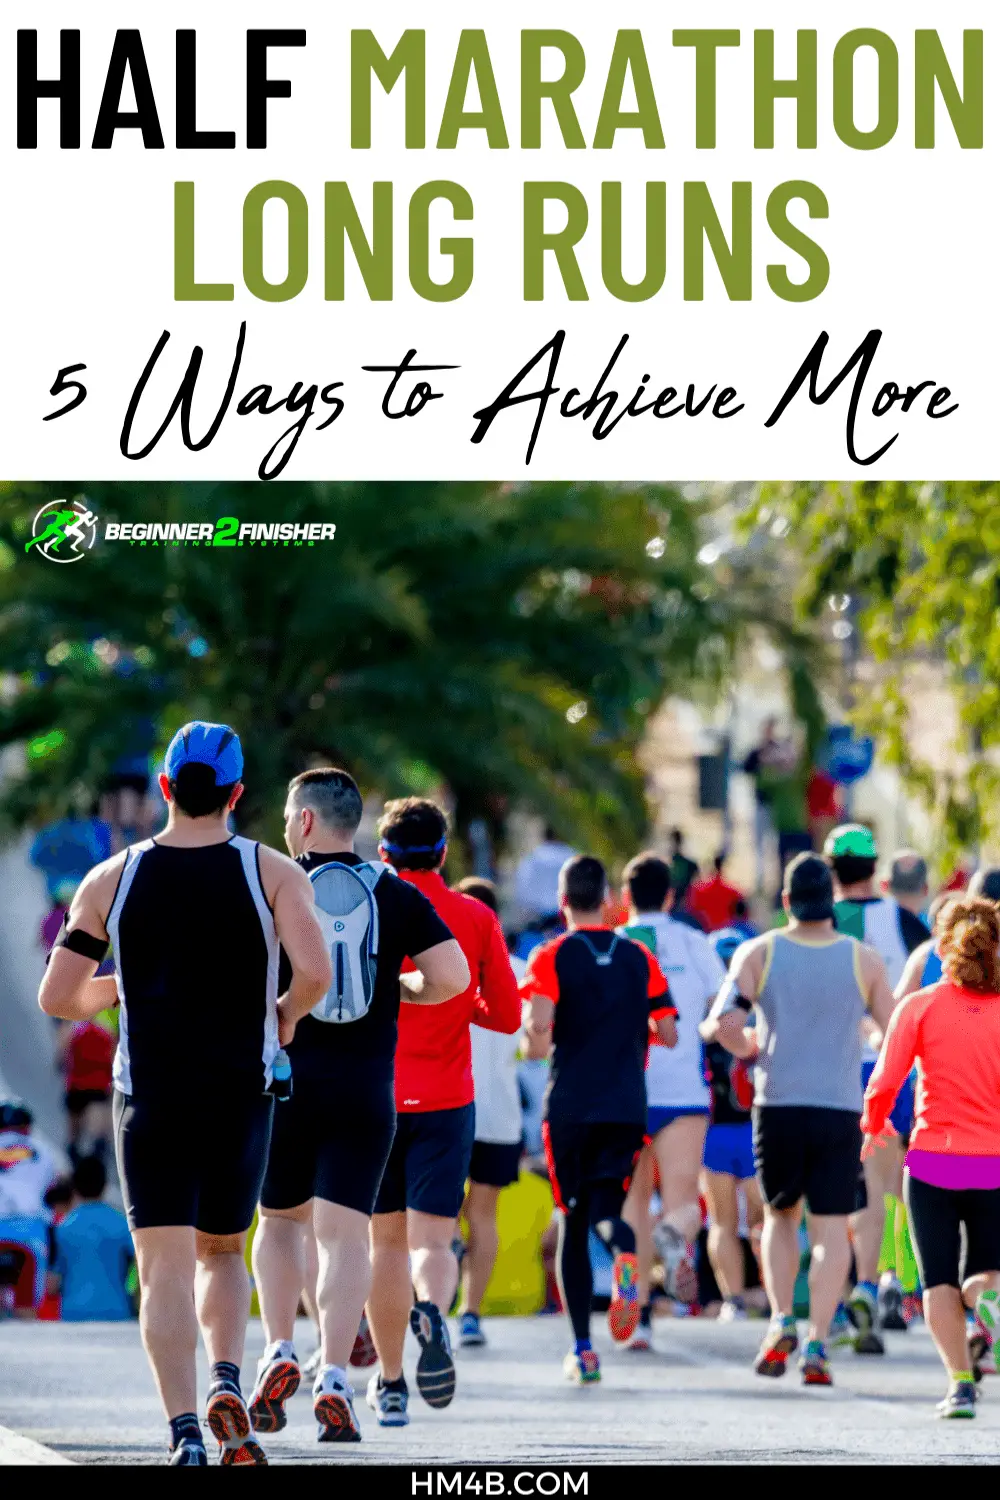 Half Marathon Long Runs - 5 Ways to Achieve More